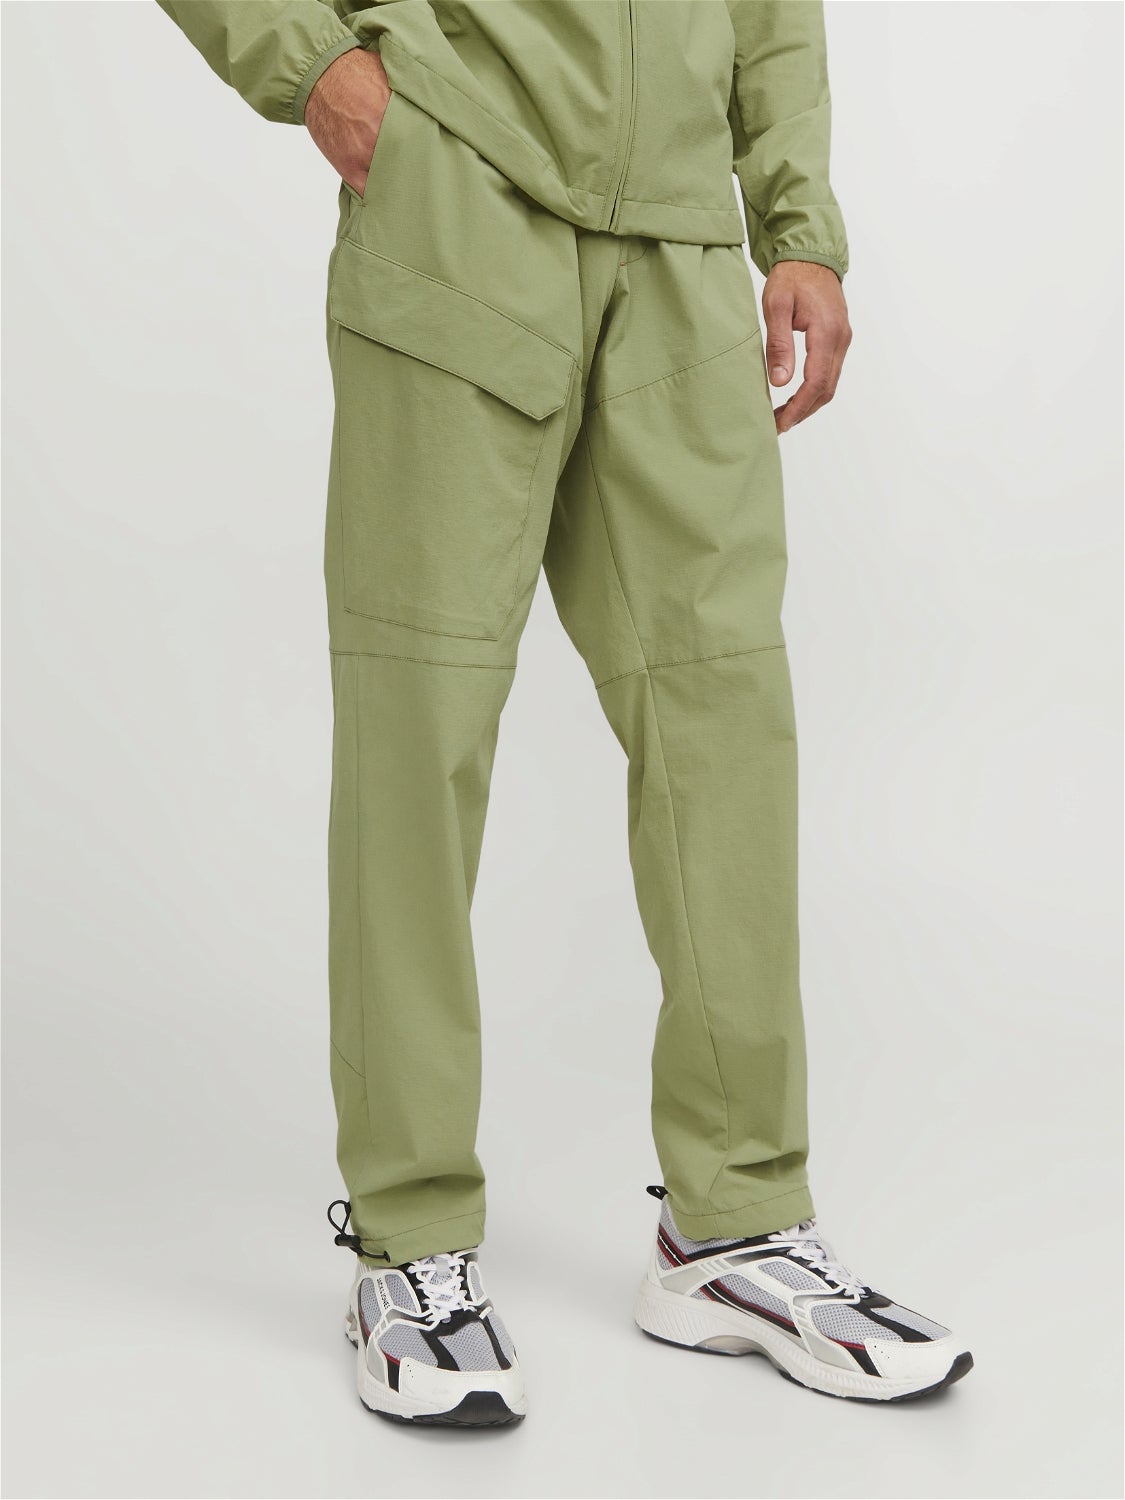 Buy Beige Cotton Slim Fit Regular Pants for Men Online at Fabindia |  20047126